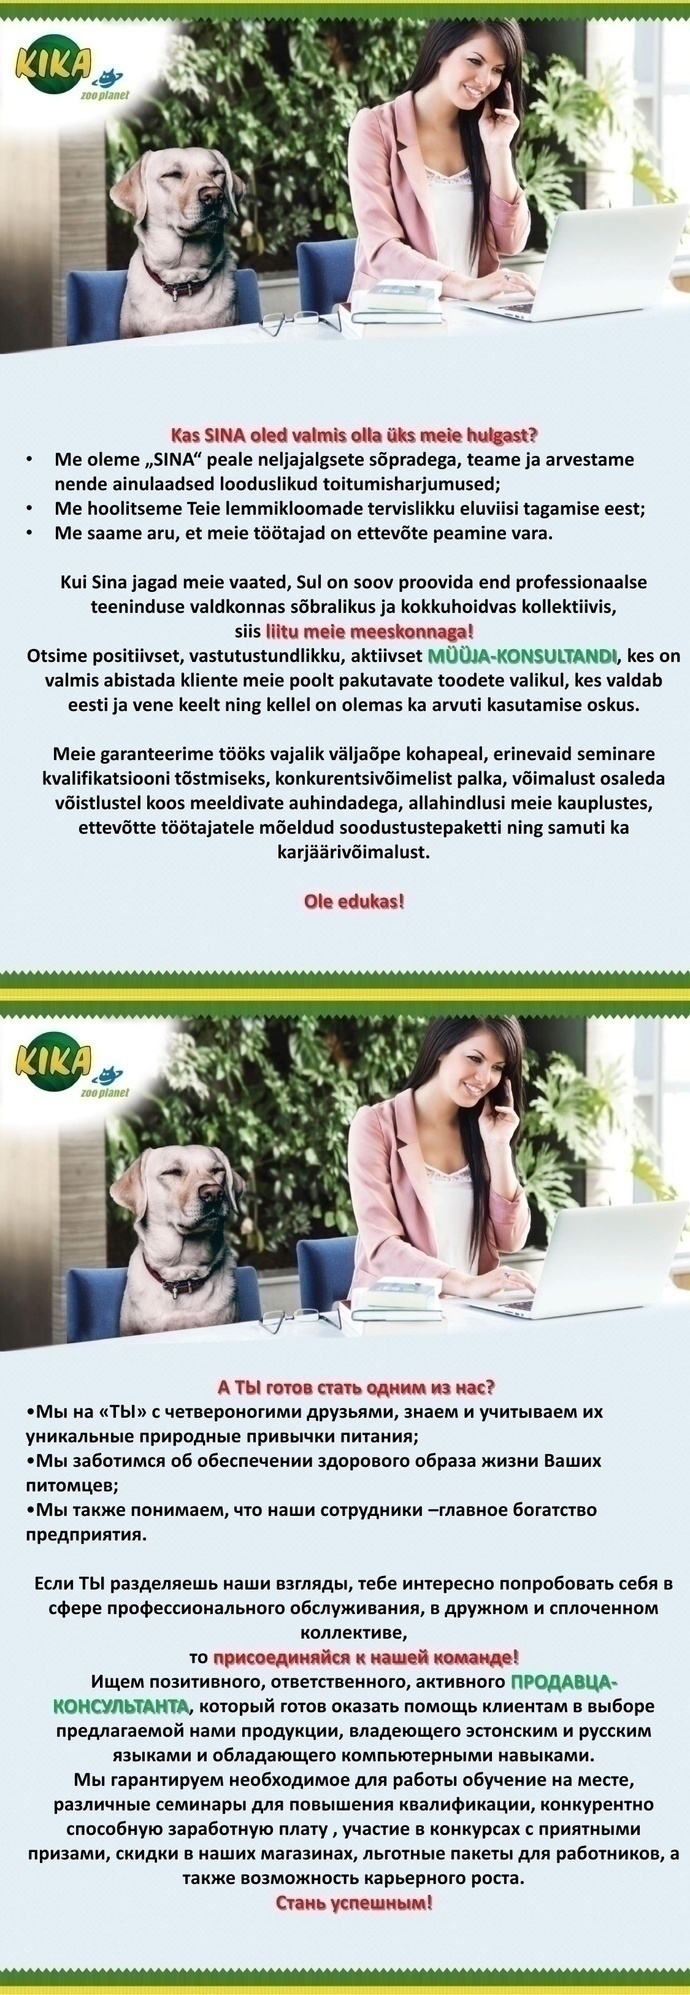 ZOO PLANET OÜ Müüja-konsultant (Viljandi linn)